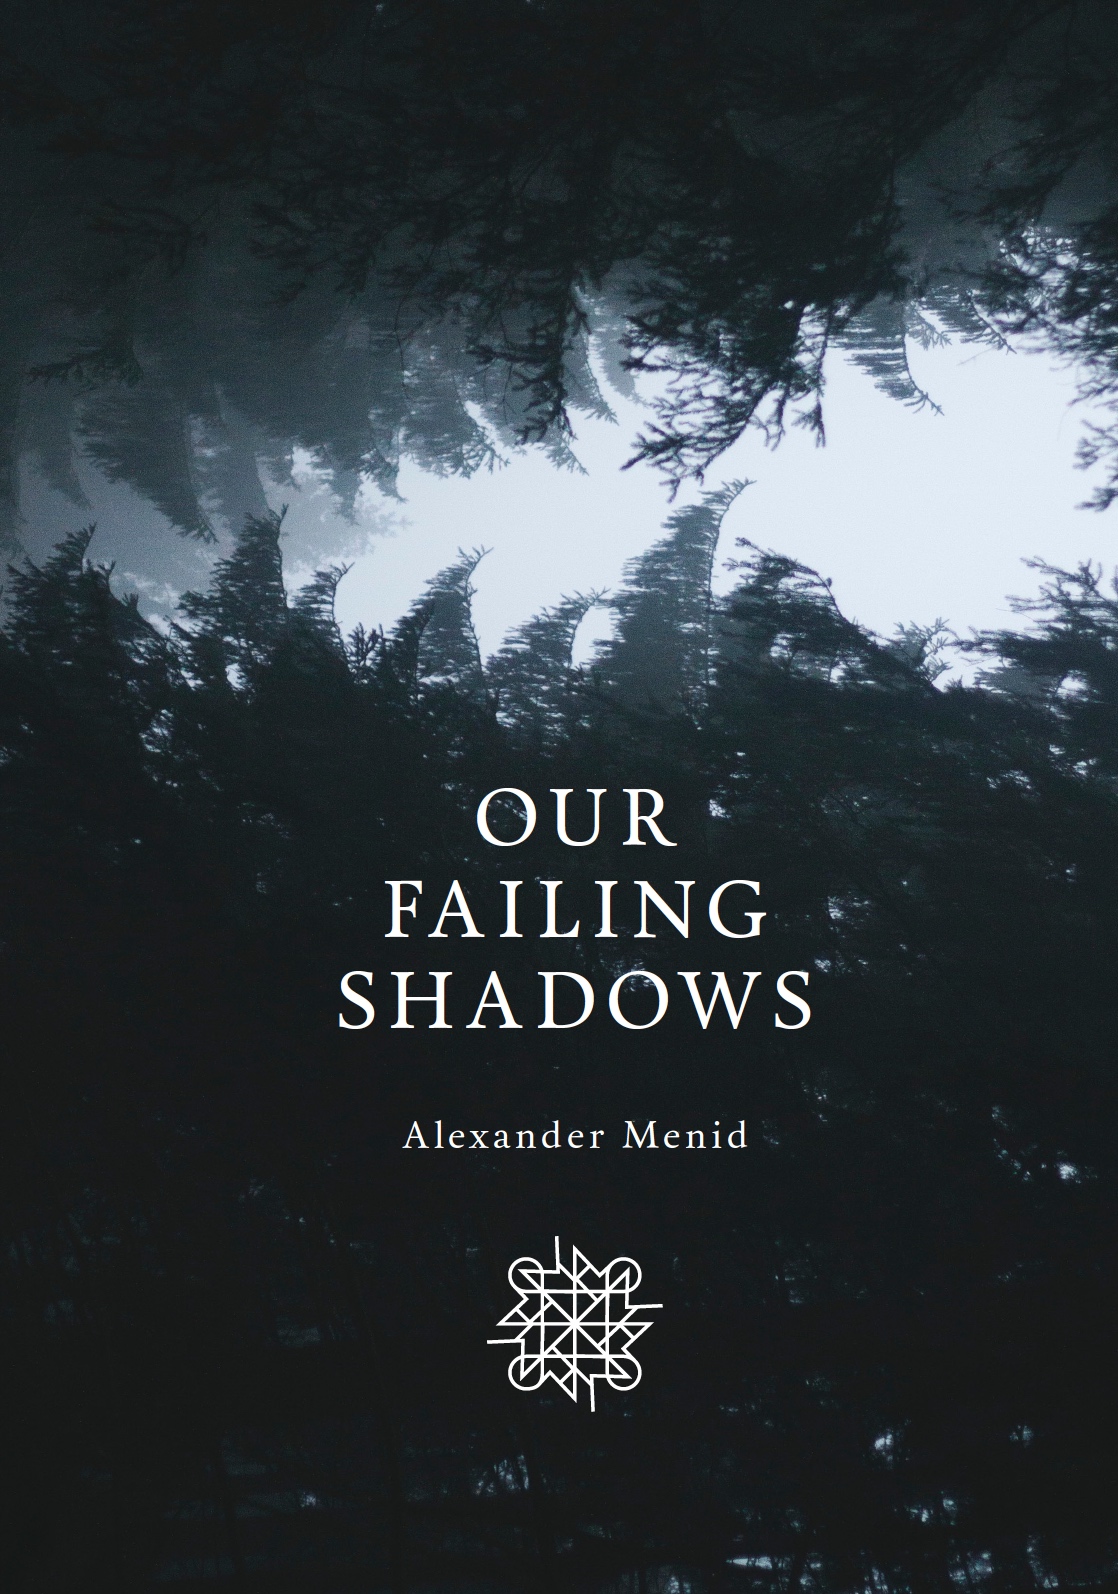 Our Failing Shadows by Alexander Menid